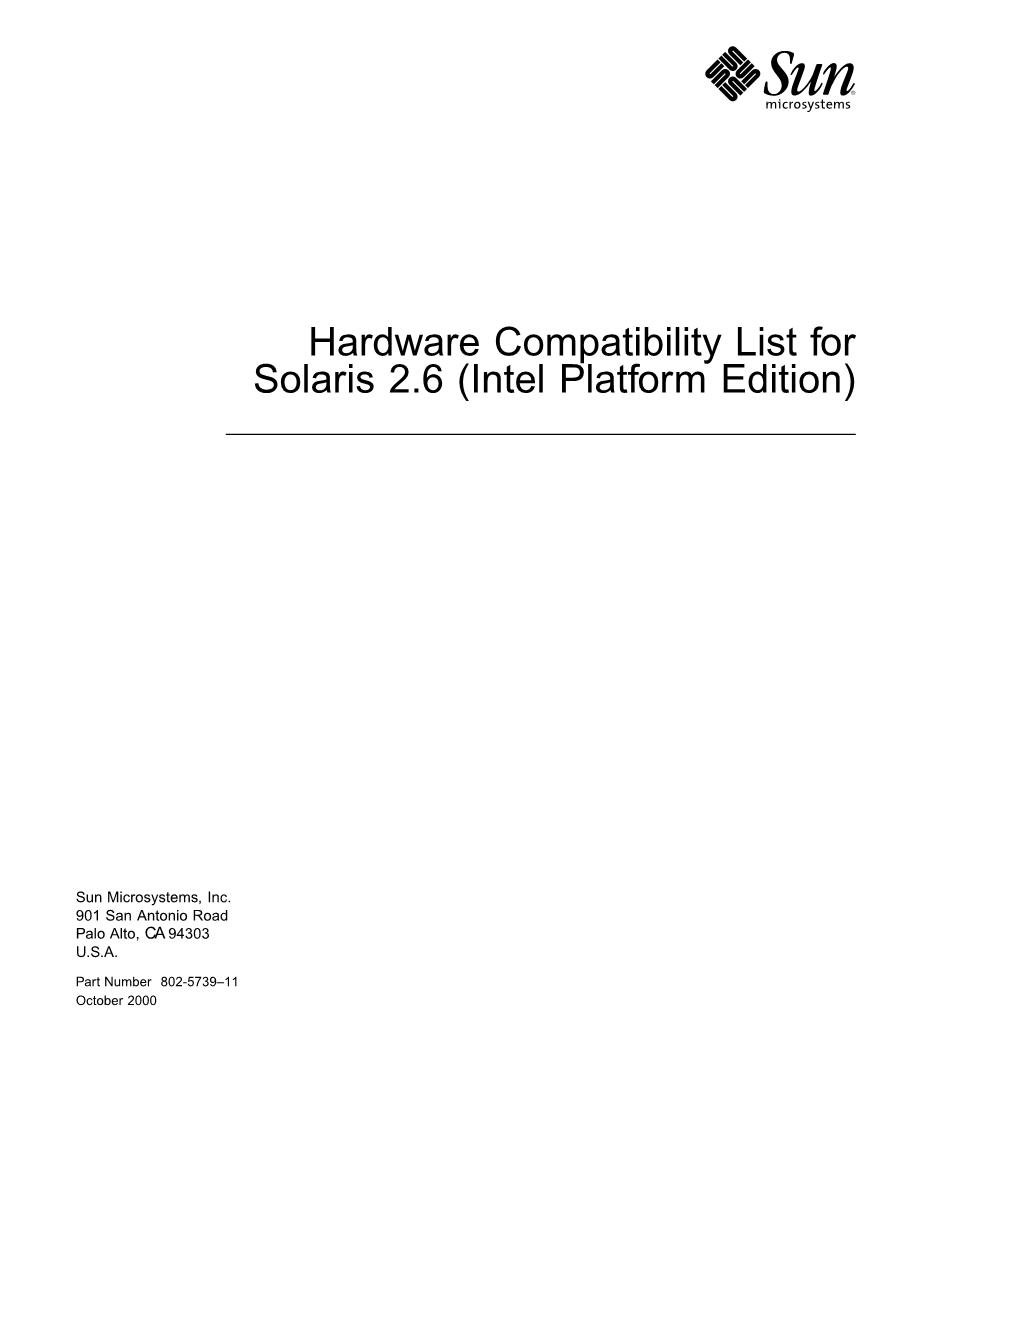 Hardware Compatibility List for Solaris 2.6 (Intel Platform Edition)